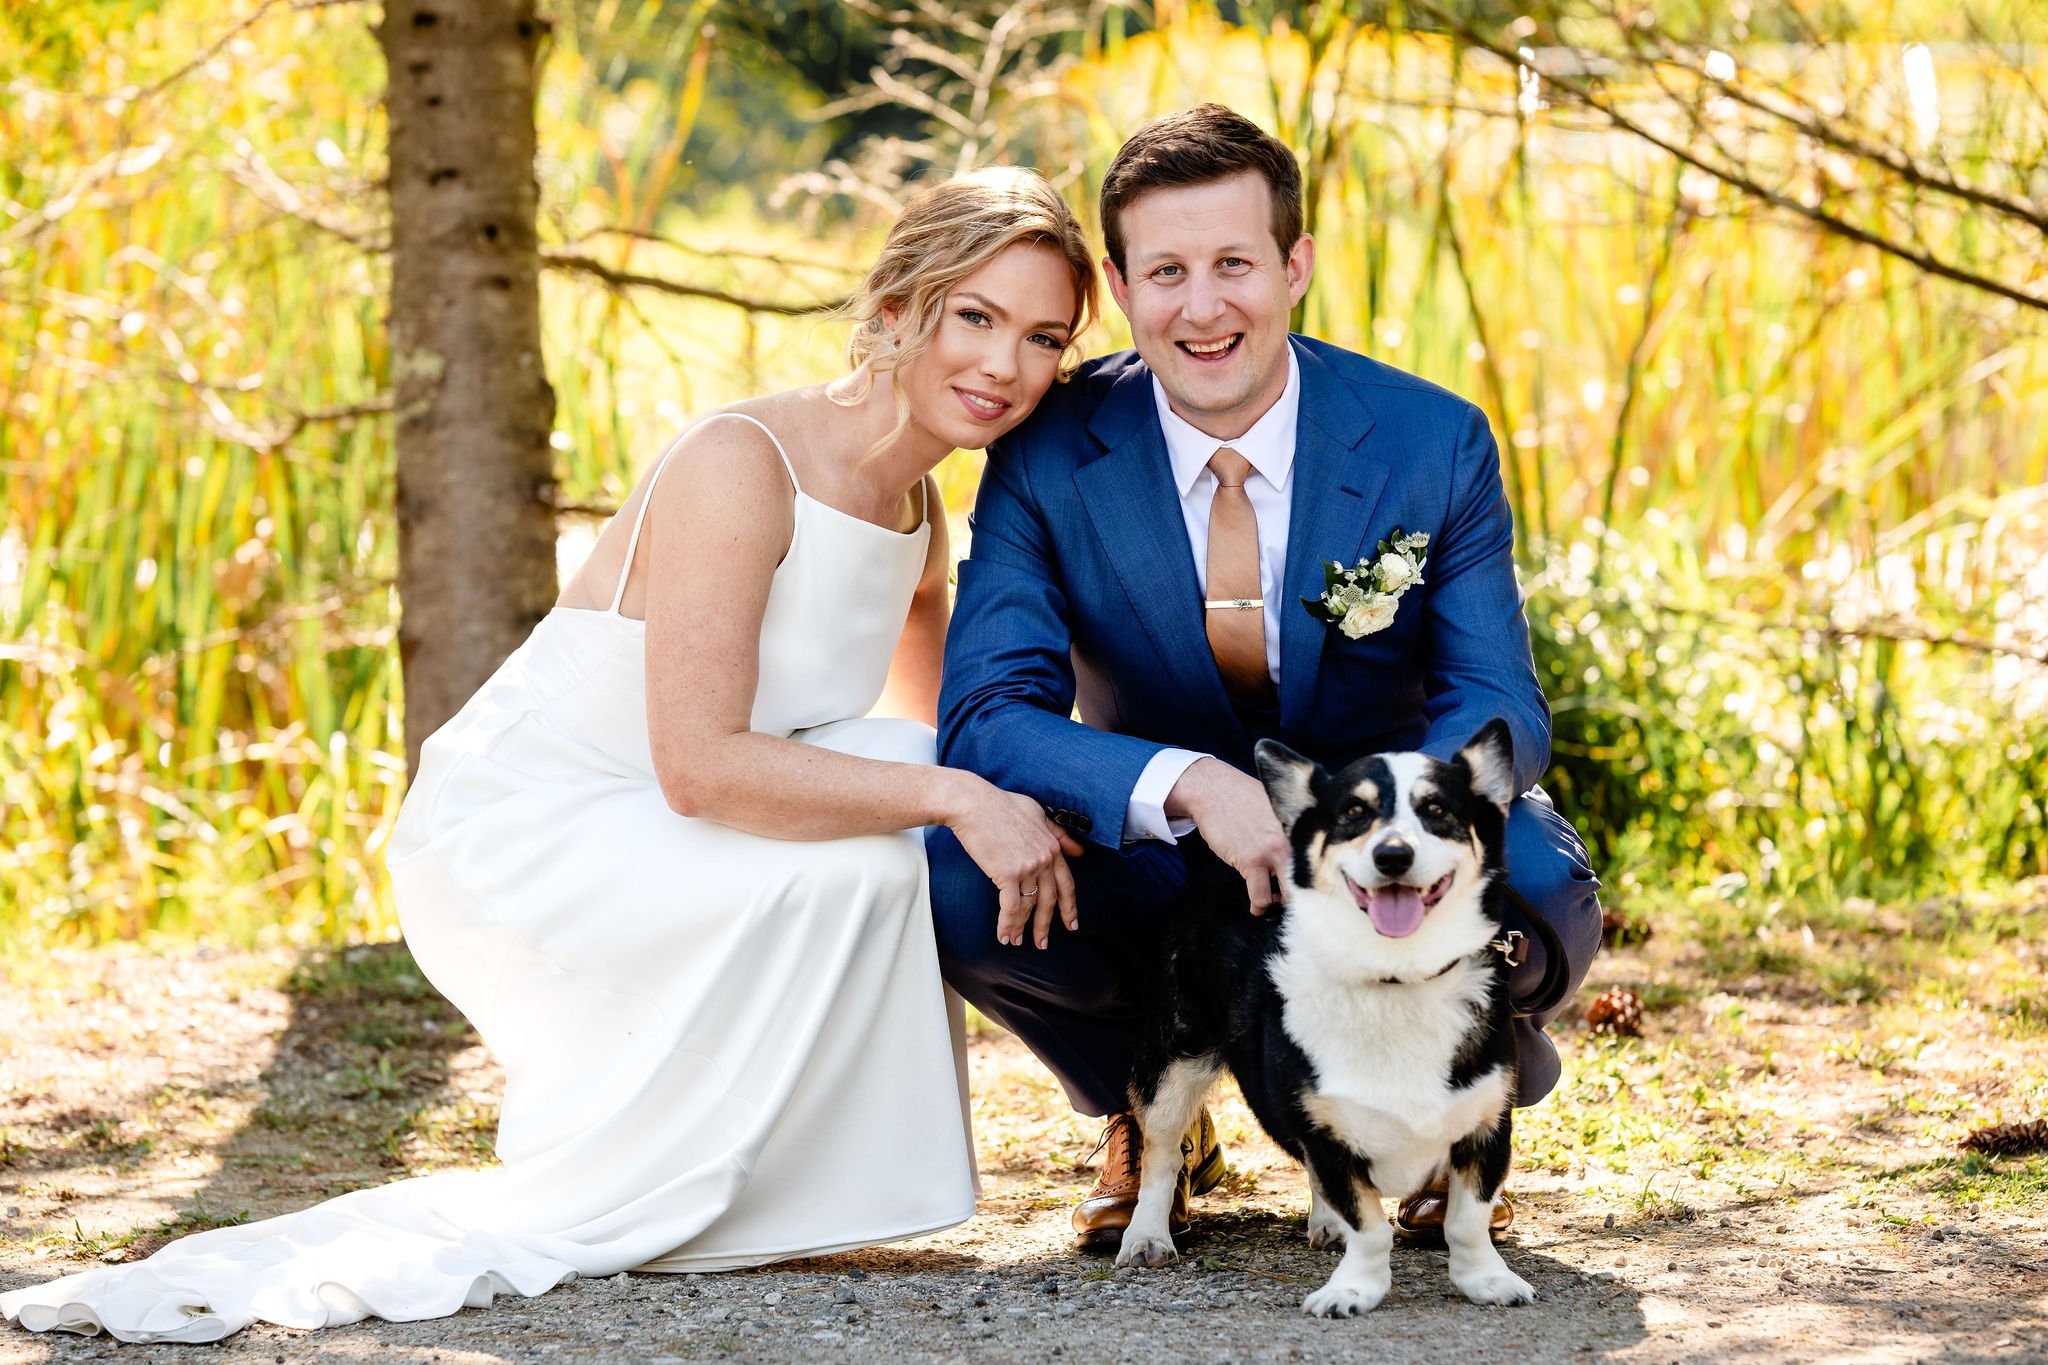 wedding photograph with a pet dog